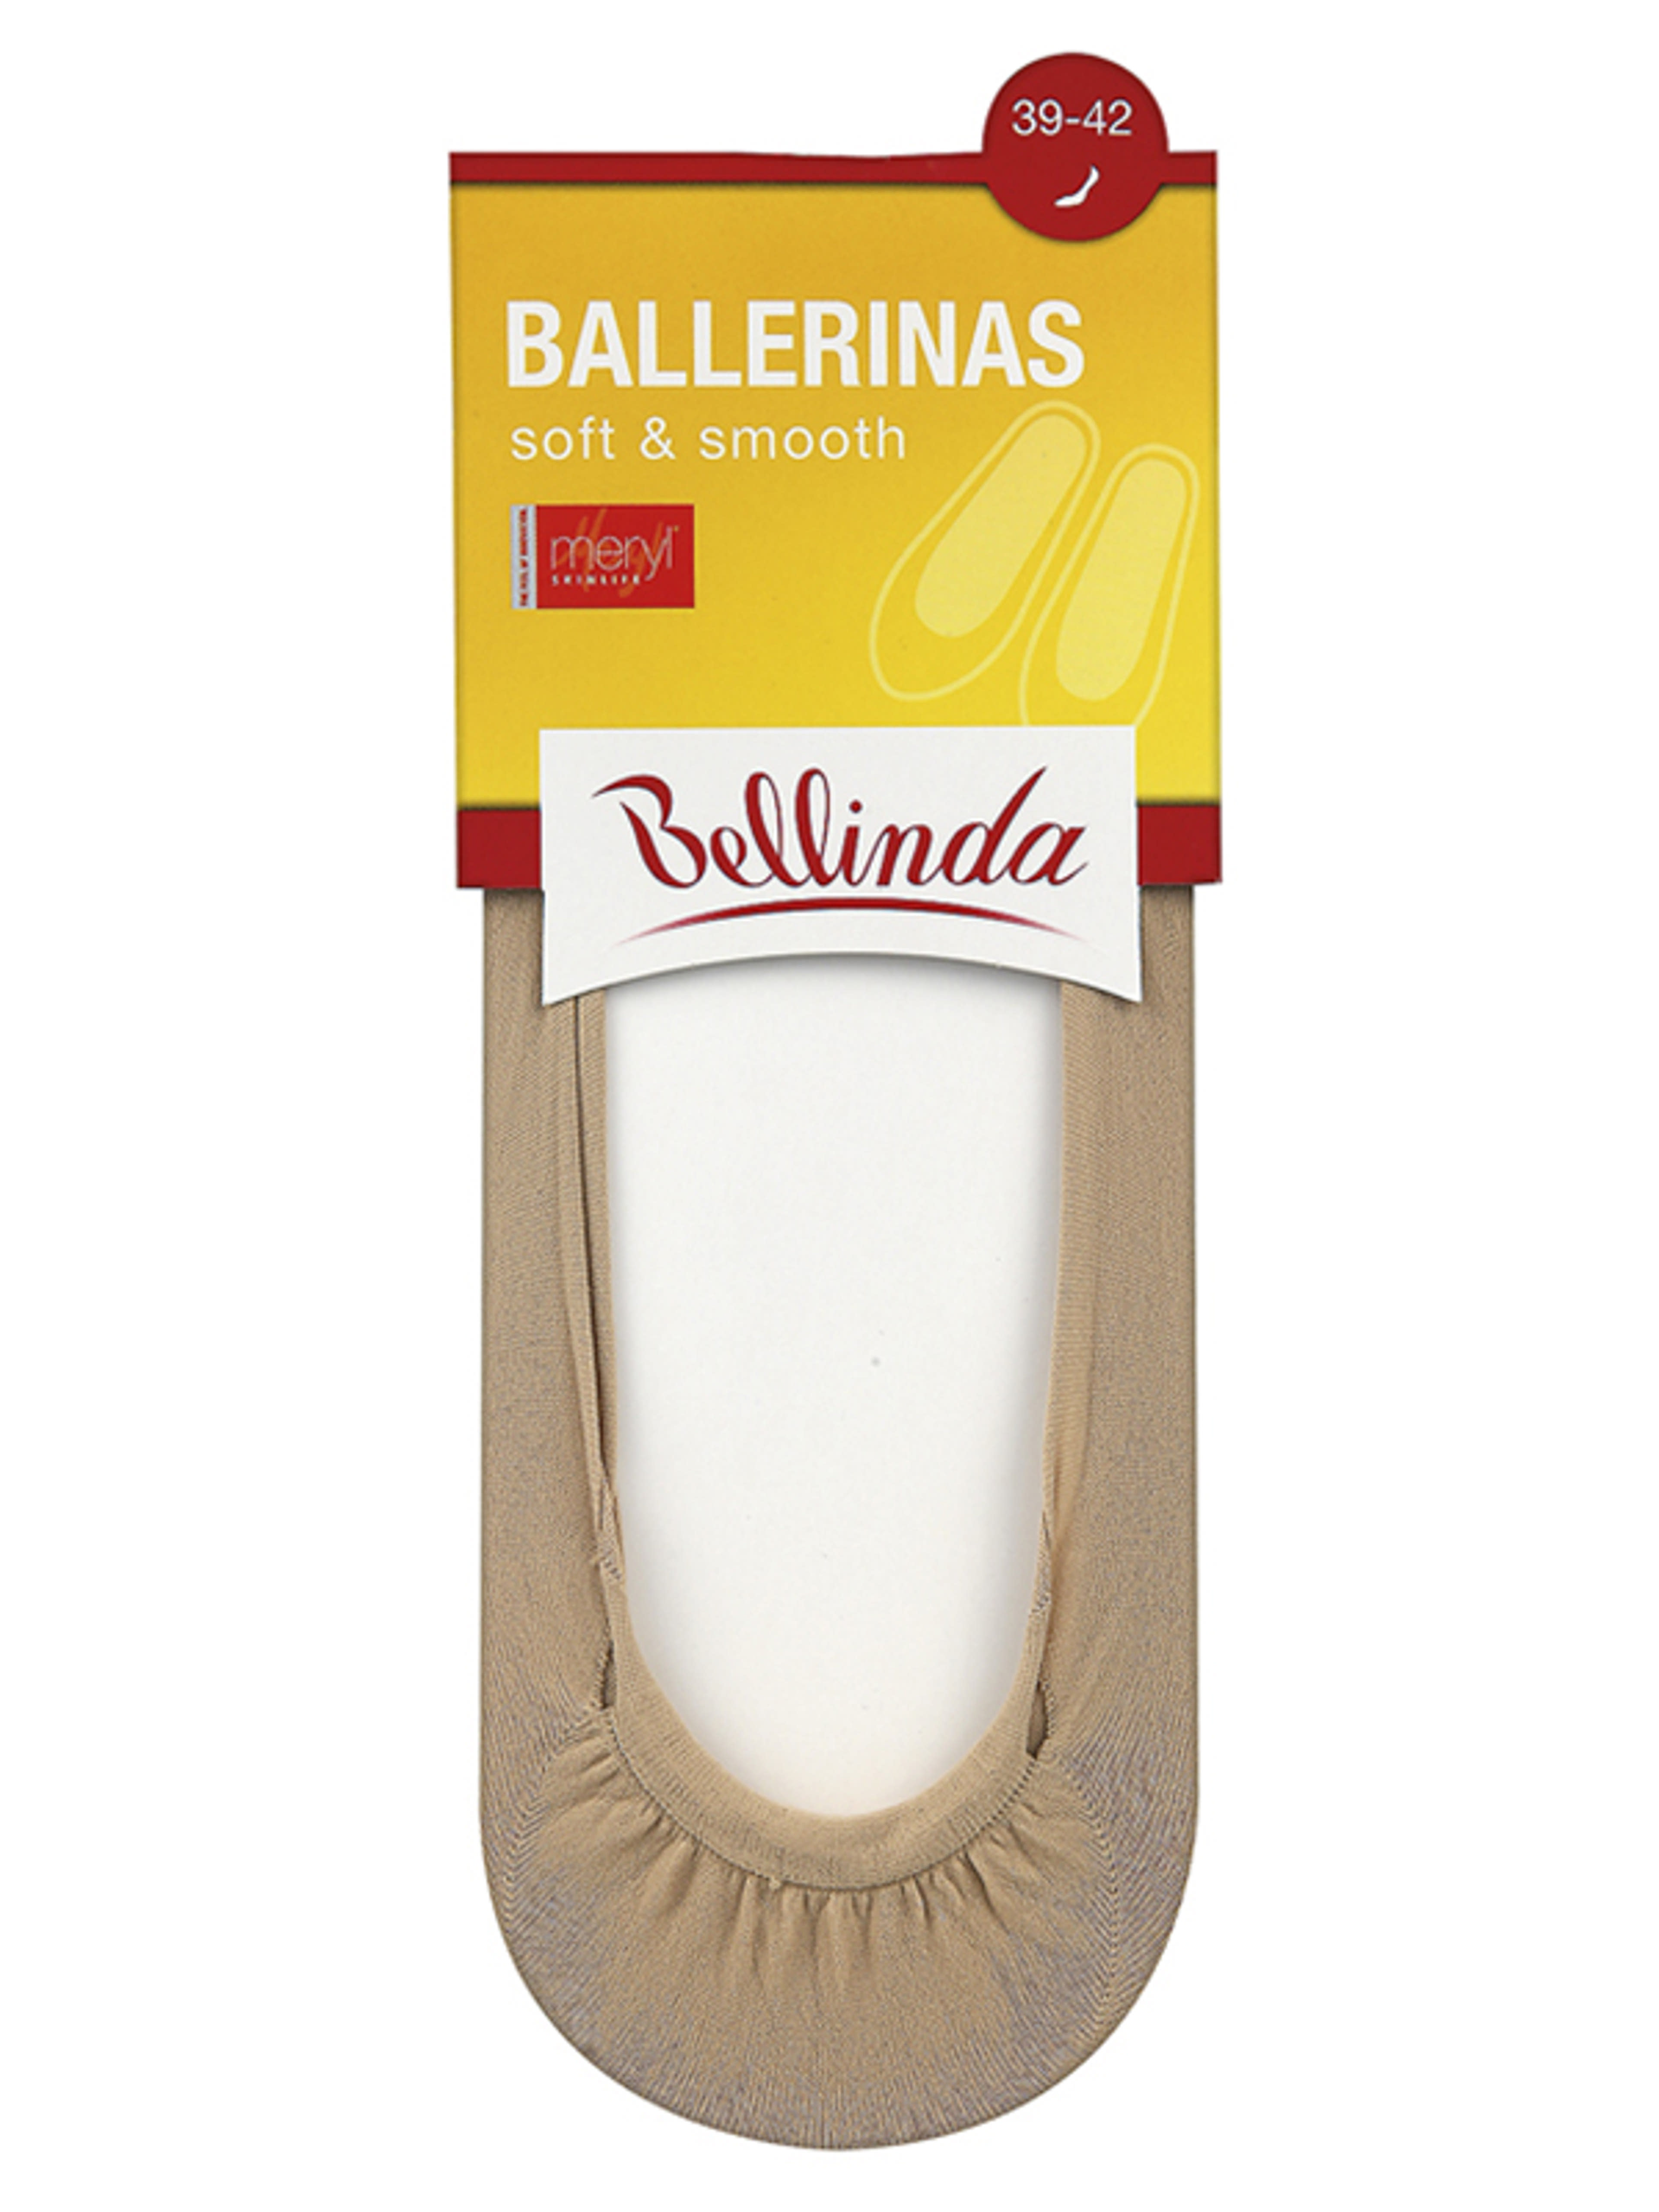 Bellinda ballerina titokzokni, test szín, 39-42 - 1 db